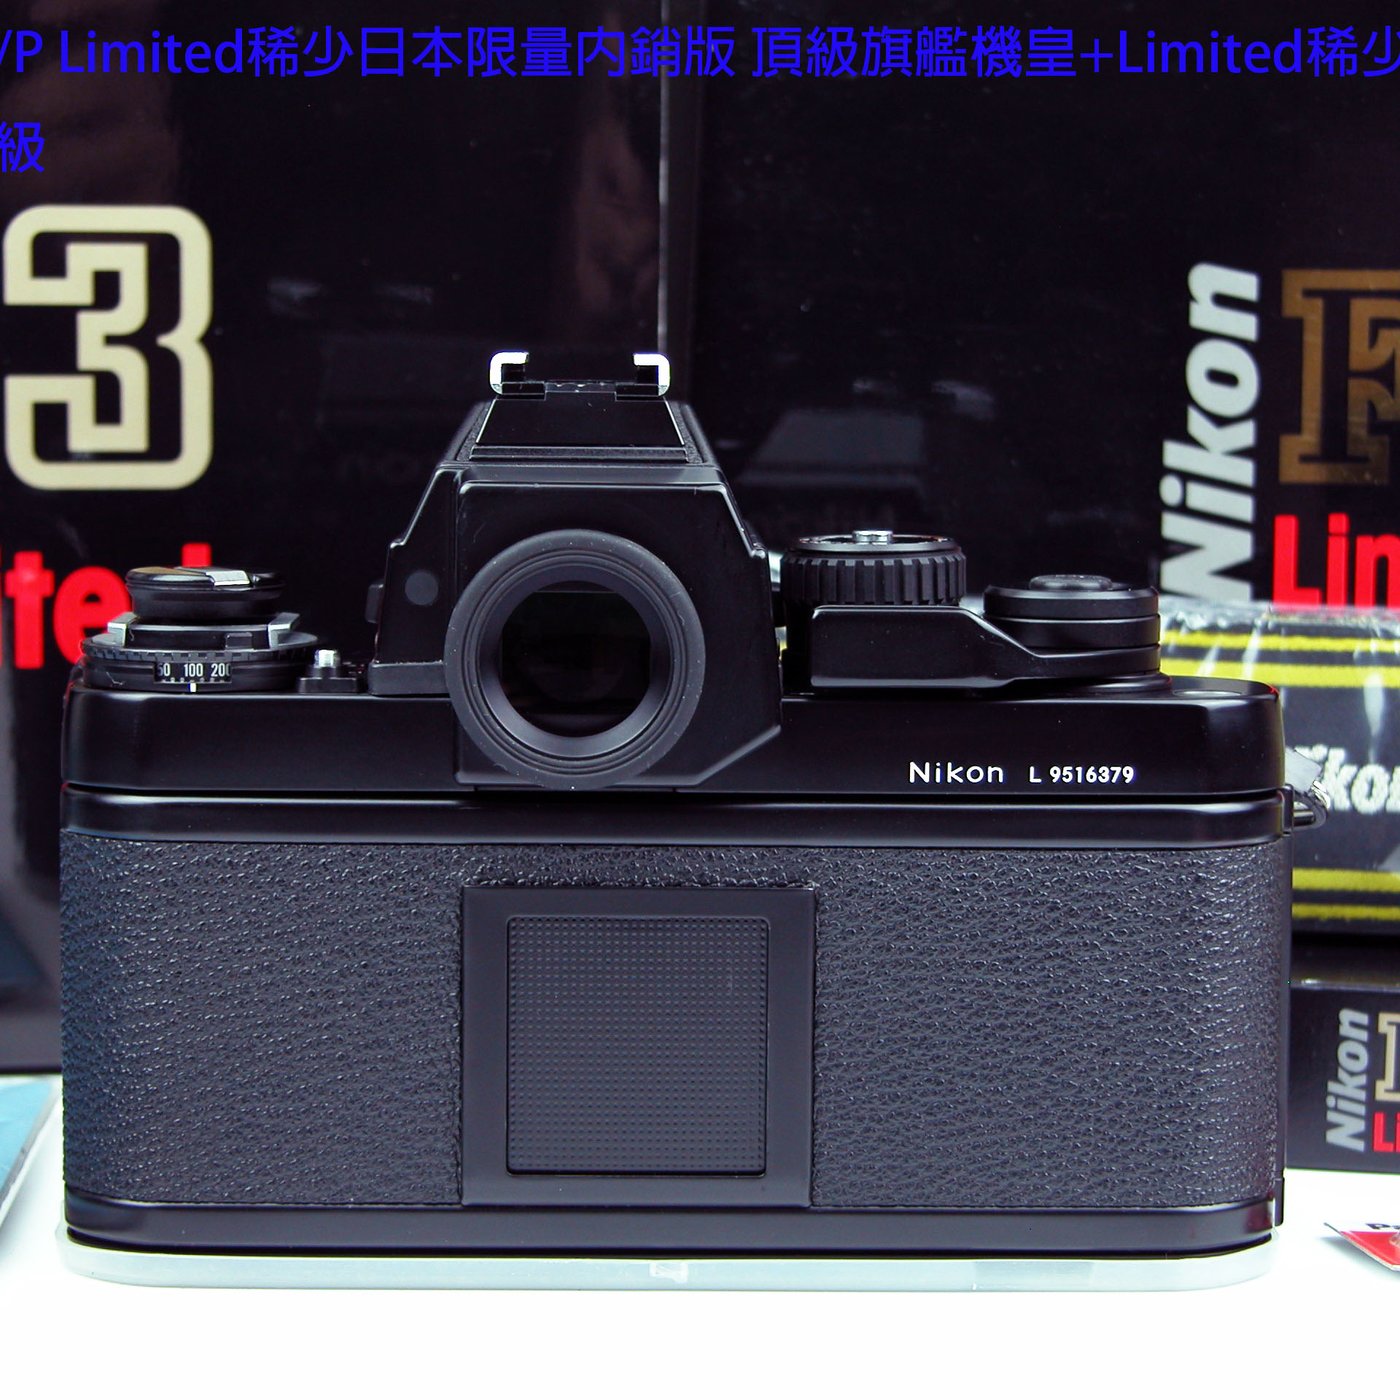 Nikon F3/P Limited 稀少日本限量內銷版頂級旗艦機皇+ 稀少限定背帶盒